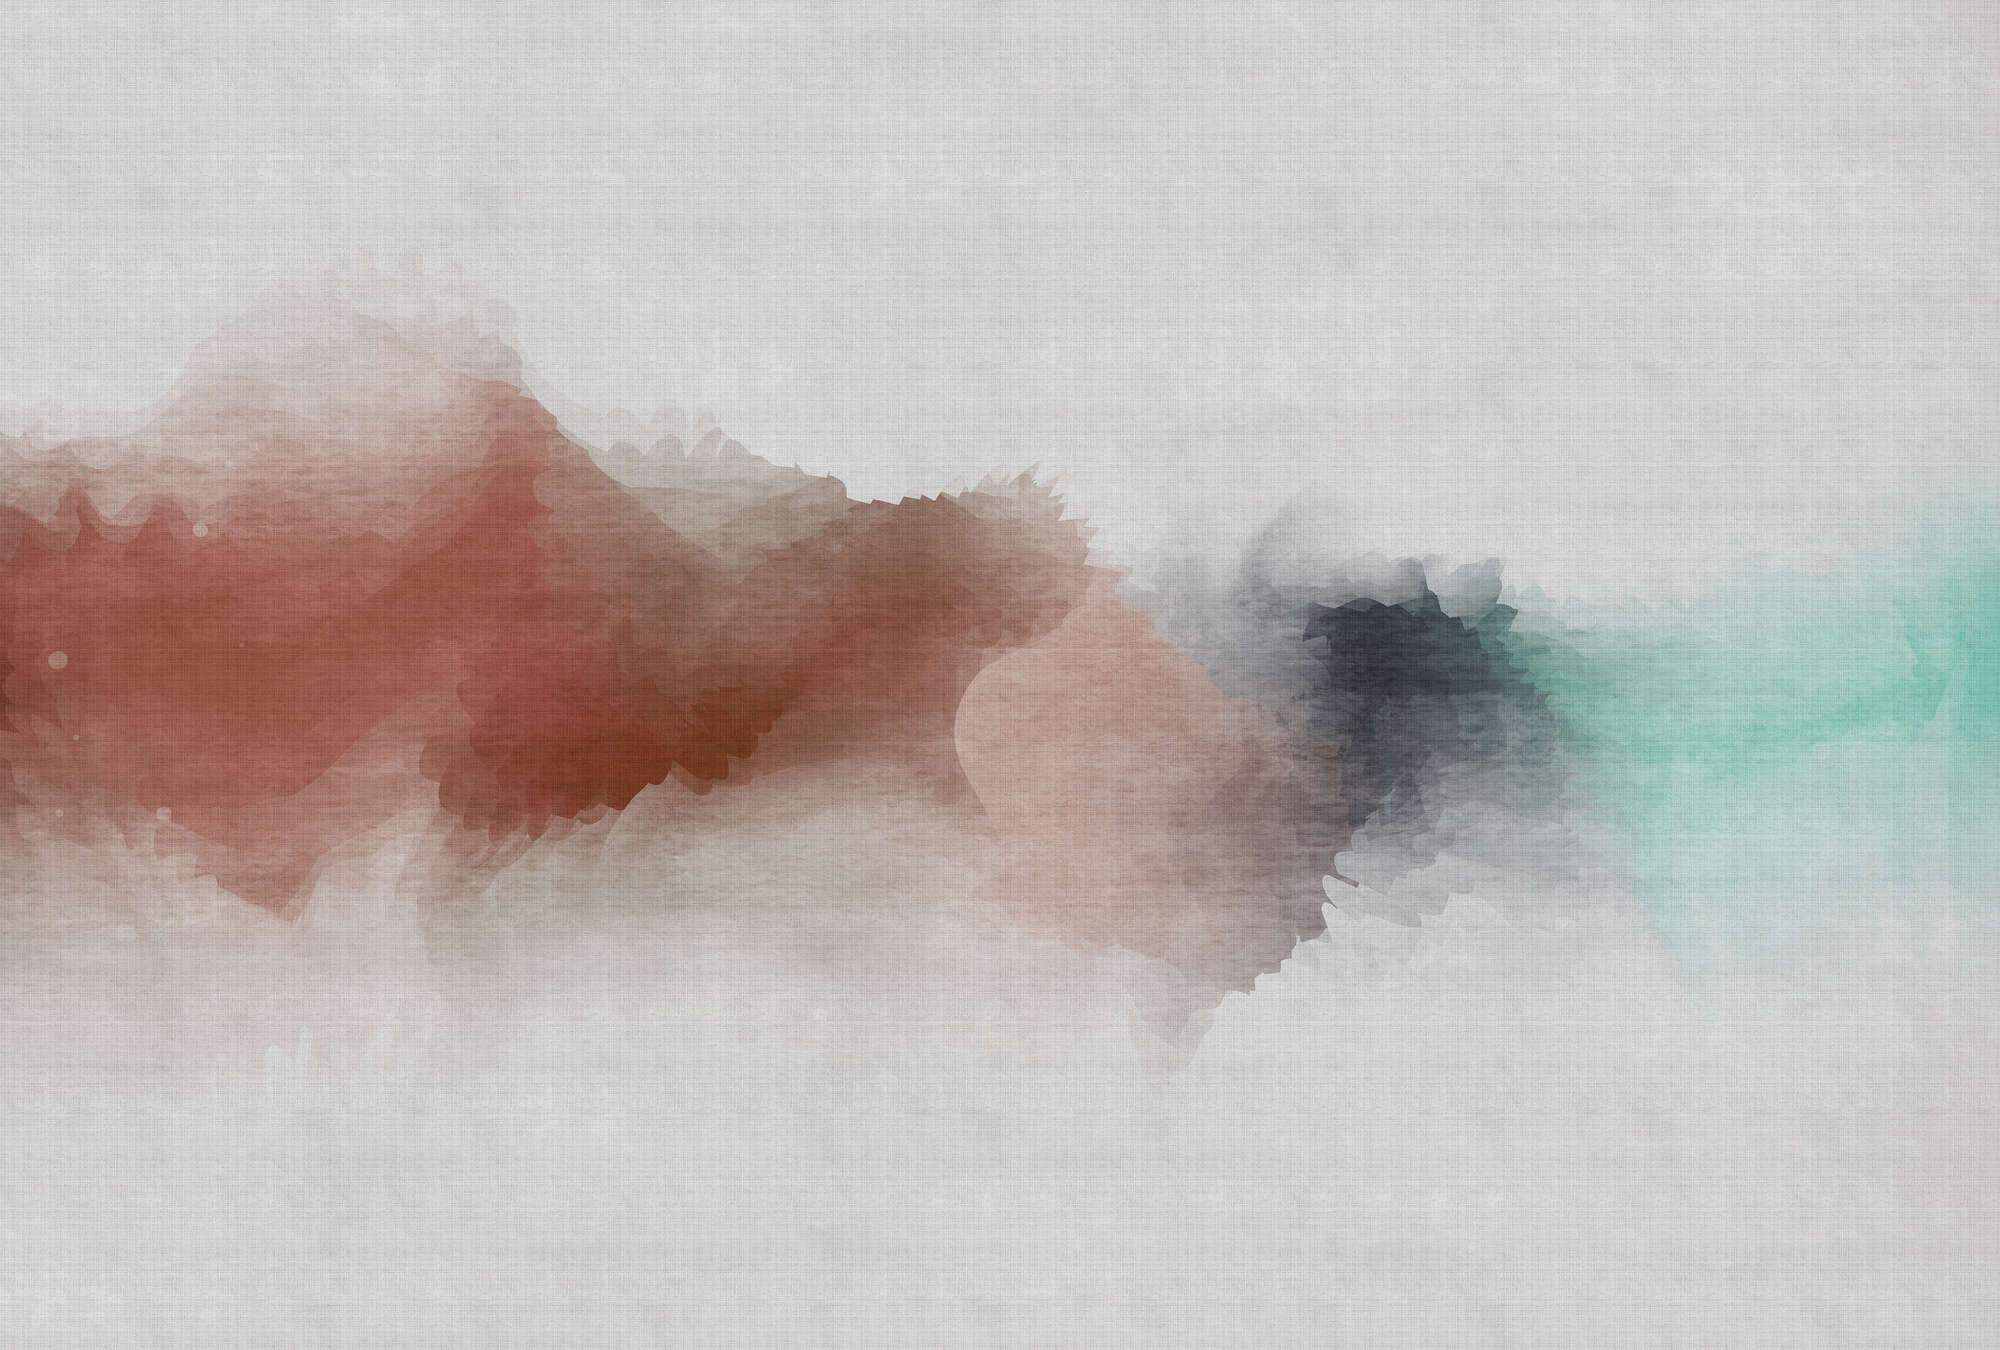             Daydream 2 - Papel Pintado Textura Lino Natural con Tinte Acuarela - Gris, Rojo | Perla Liso No Tejido
        